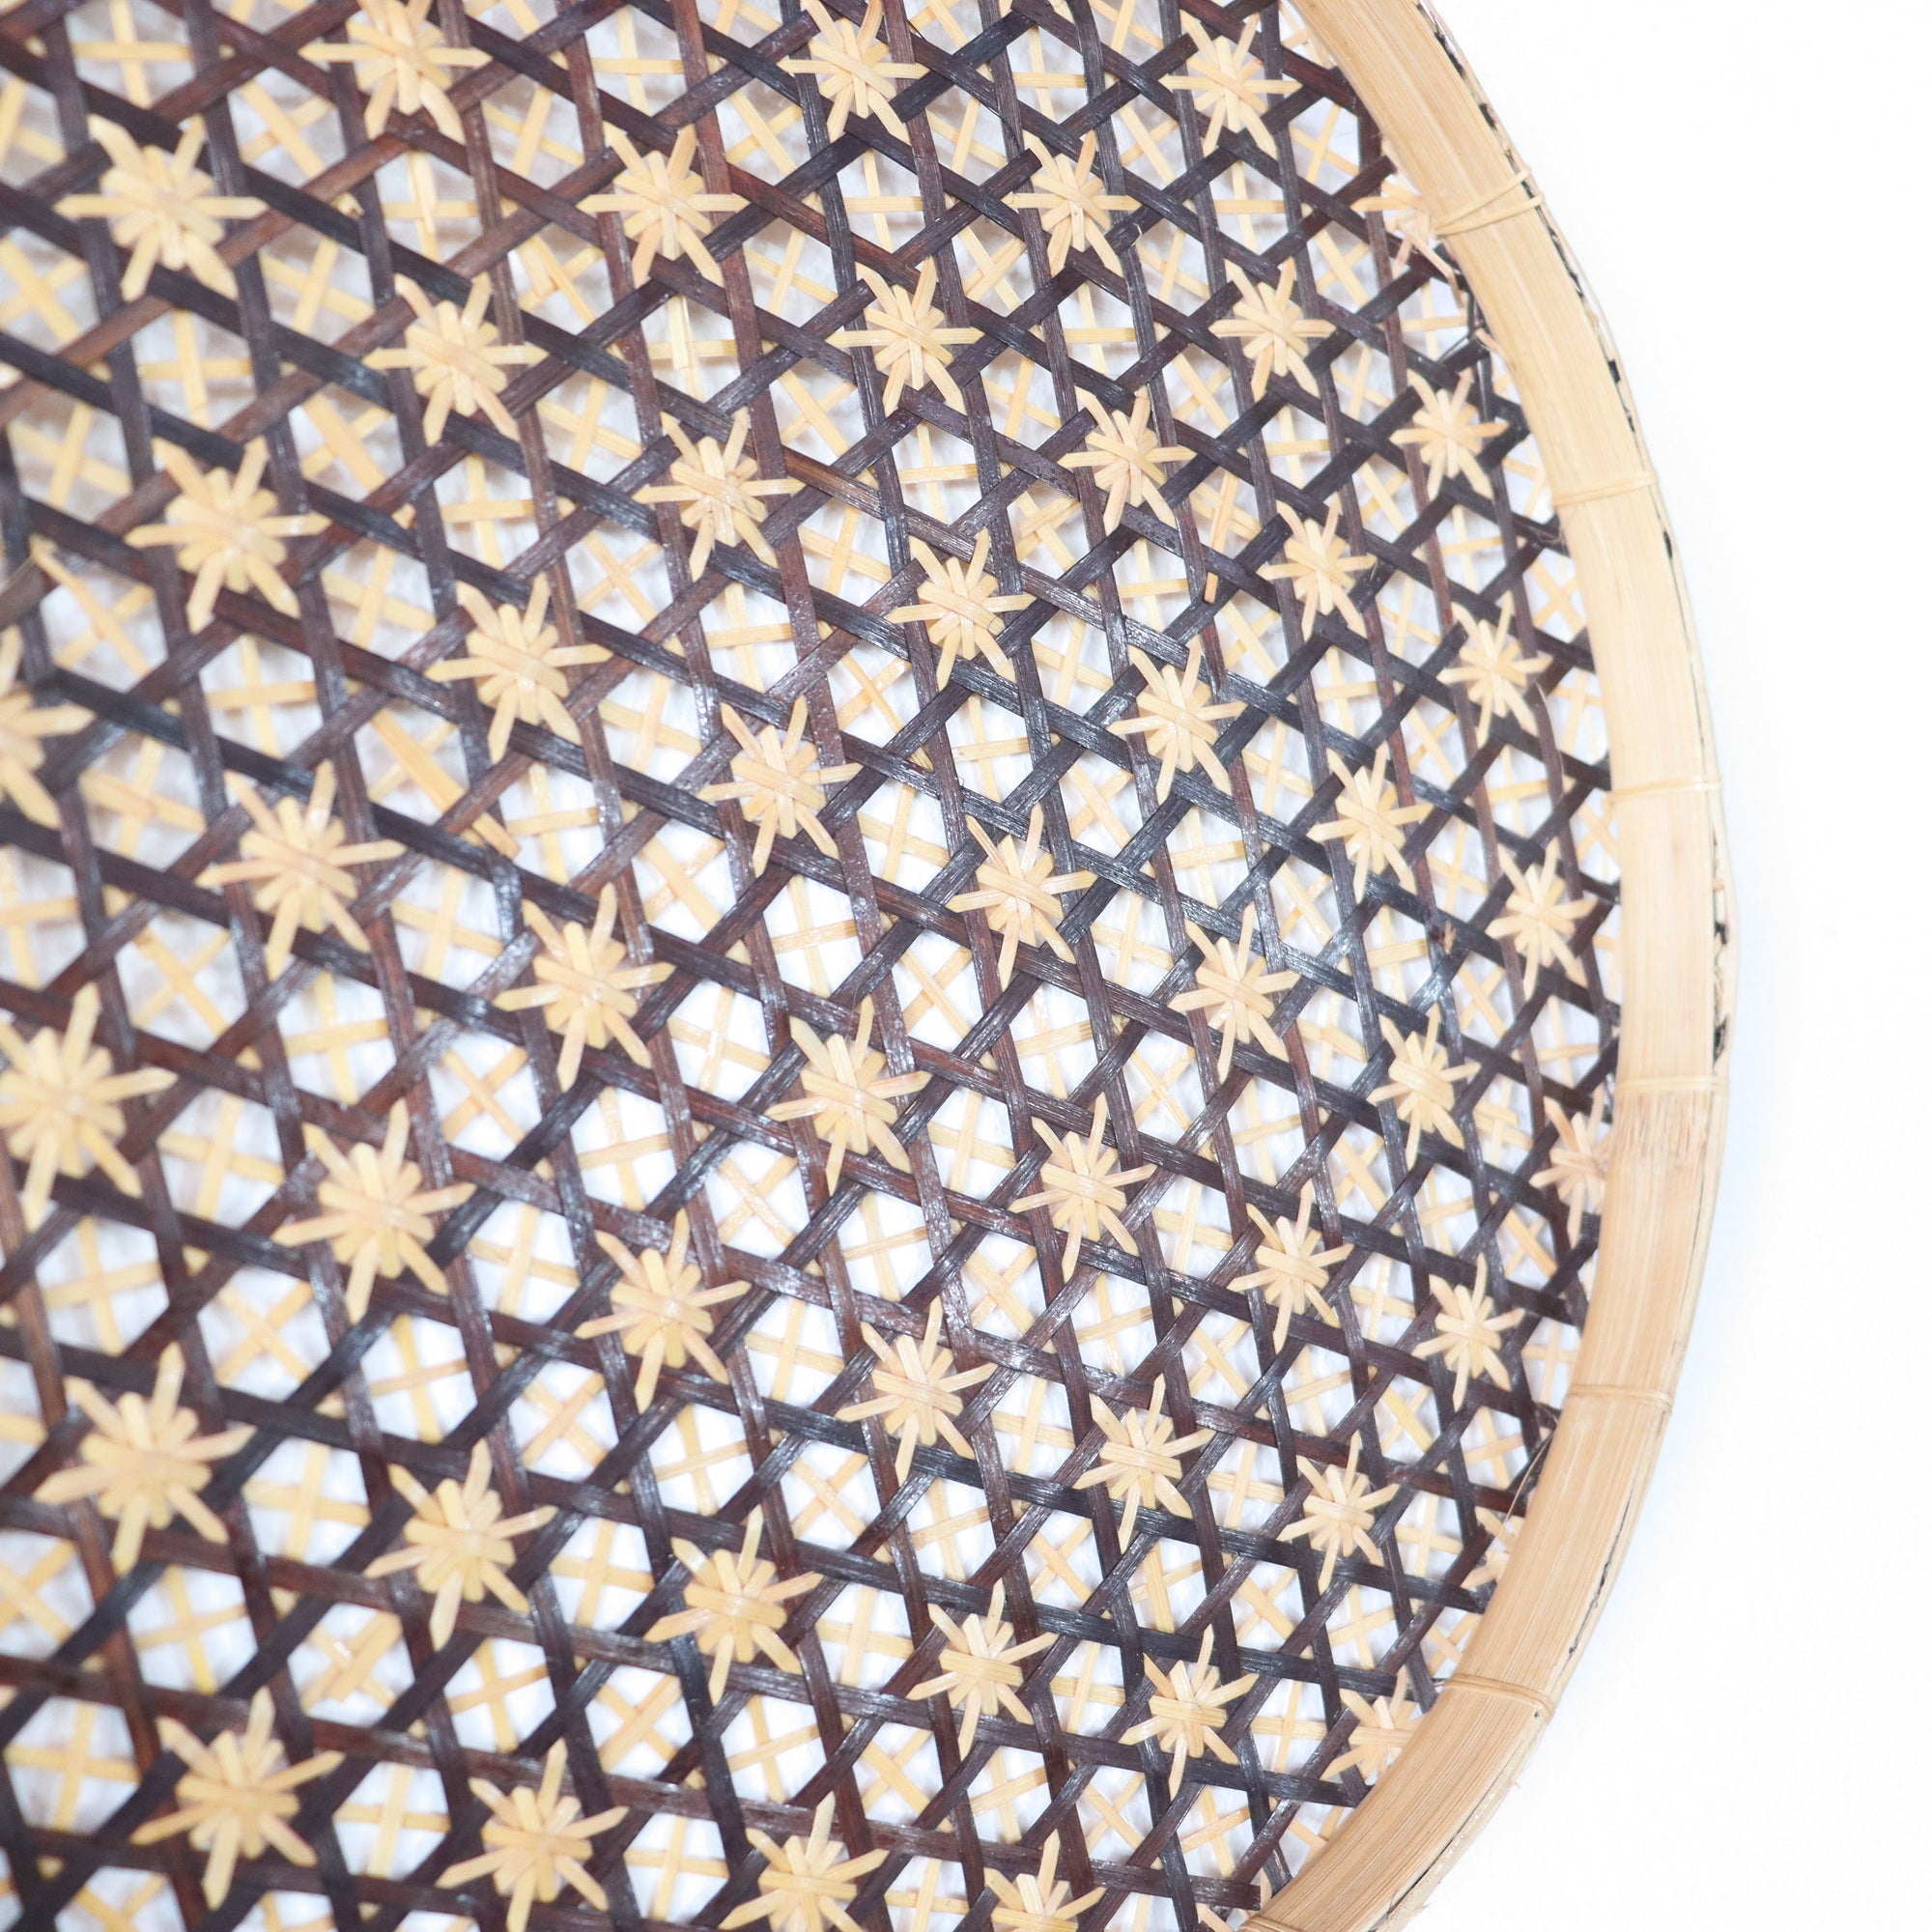 SA SI PIM - DIY Wall Art Basket Decor 14 inches